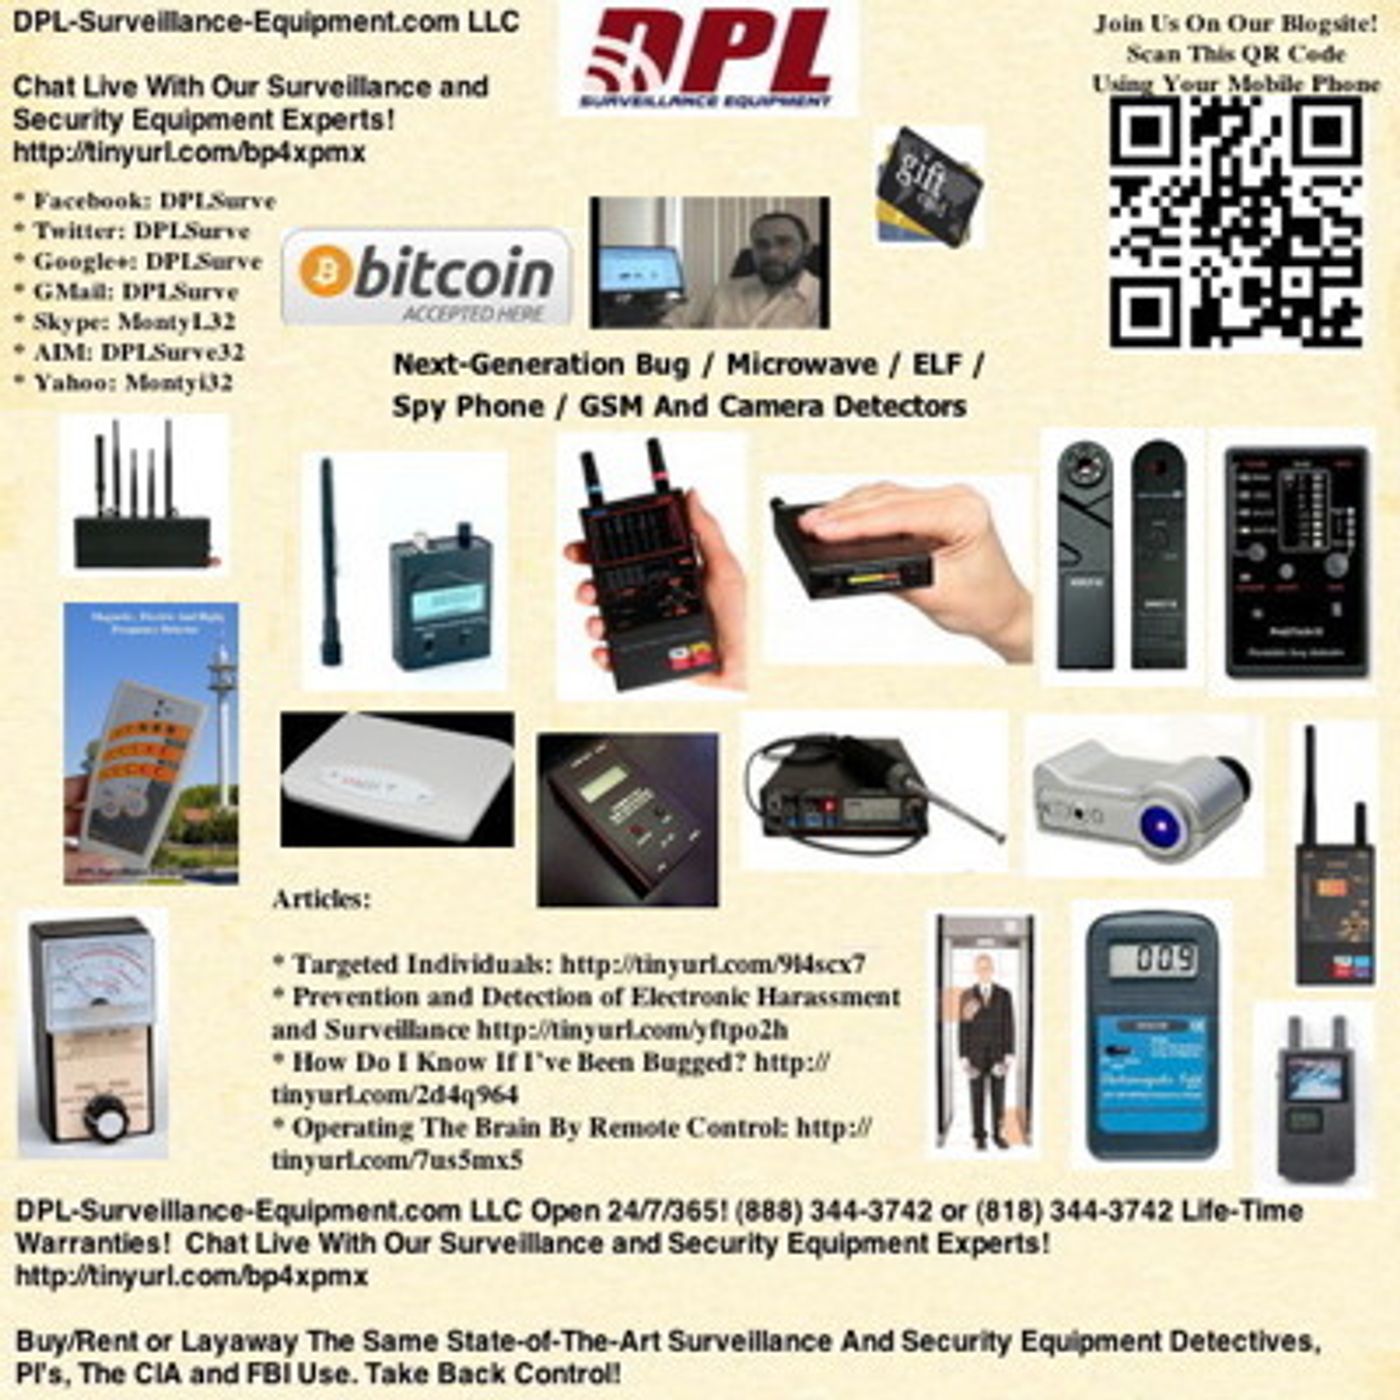 DPL-Surveillance-Equipment.com LLC